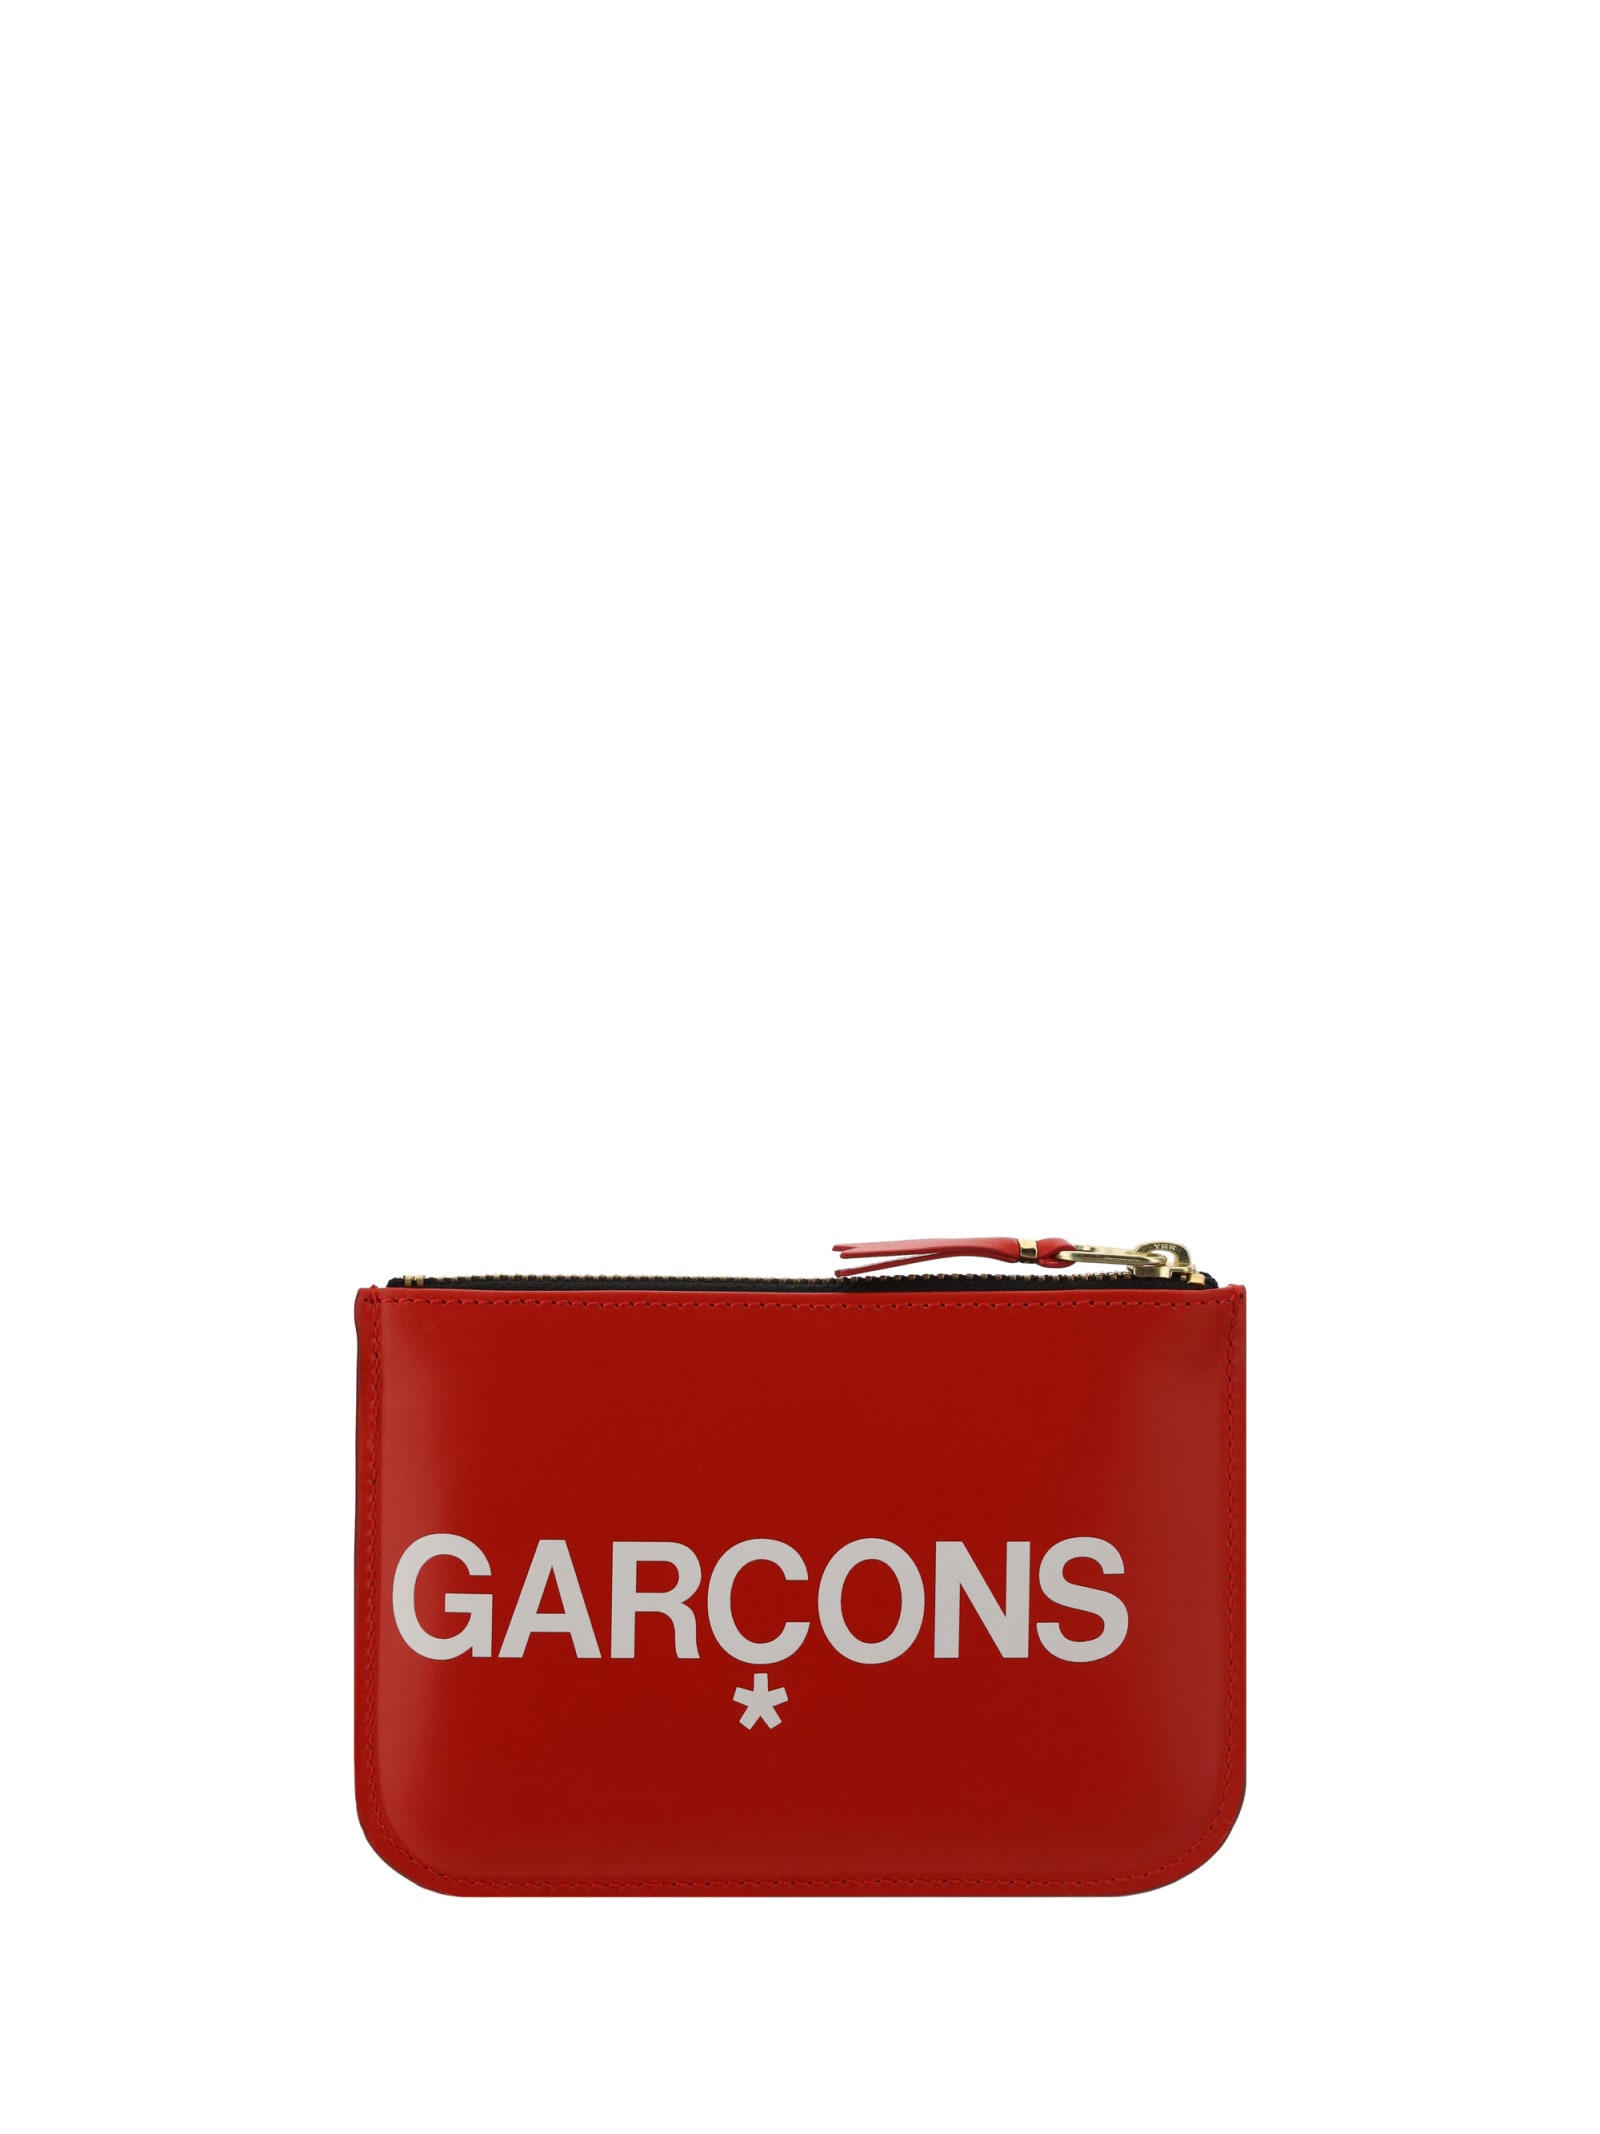 Shop Comme Des Garçons Coin Purse In Red